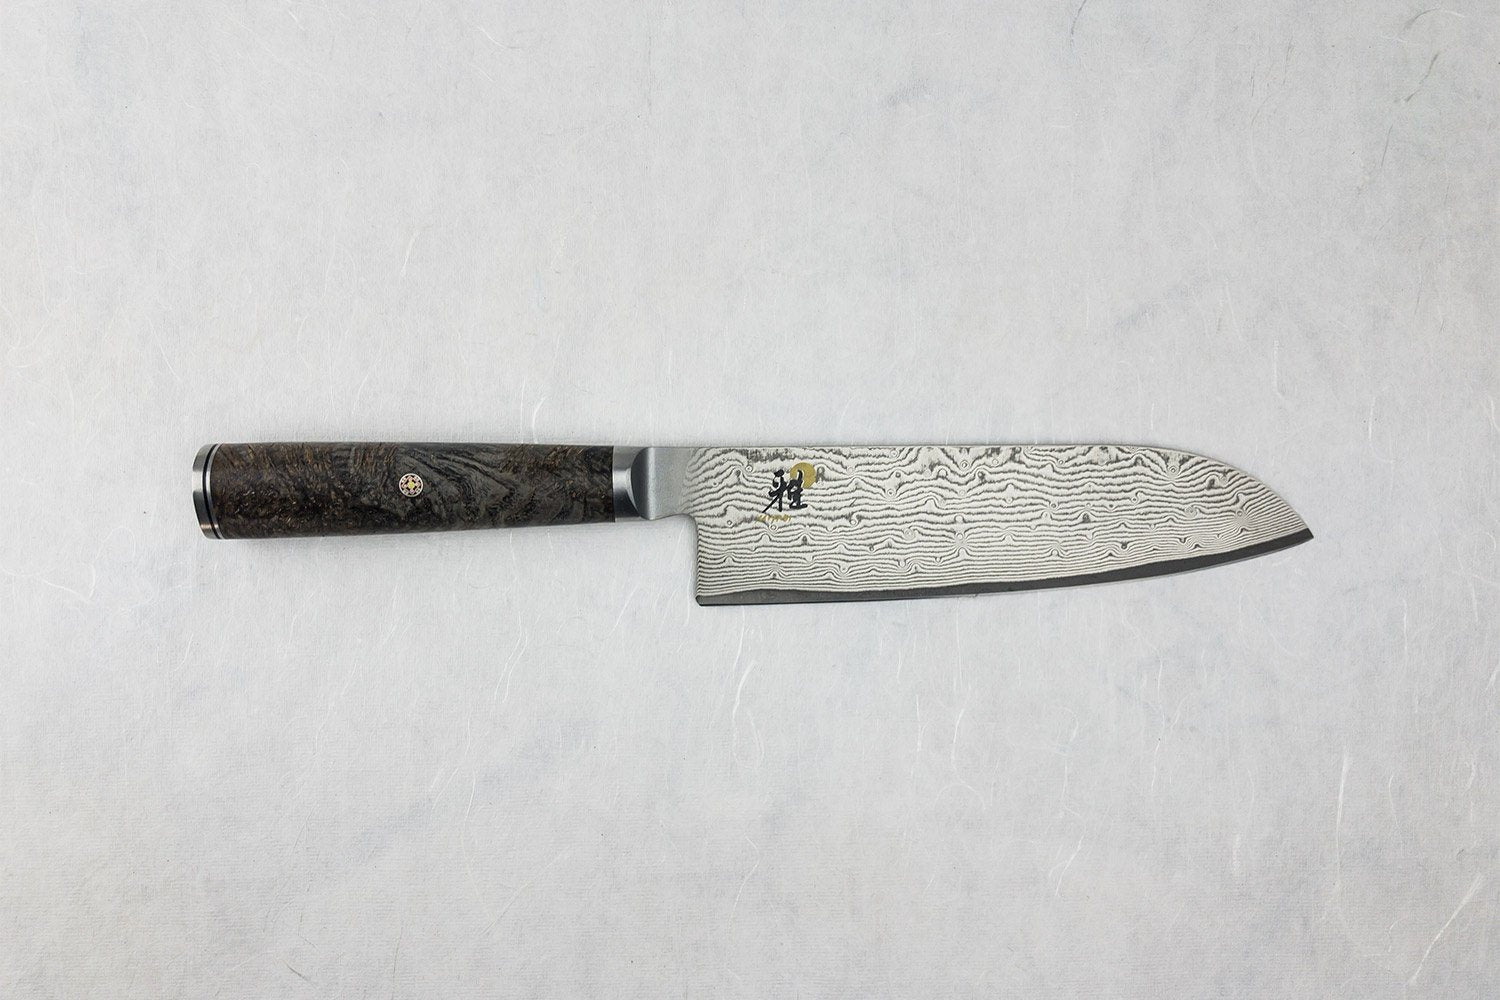 All Knifelines | Knifewear - Handcrafted Japanese Kitchen Knives